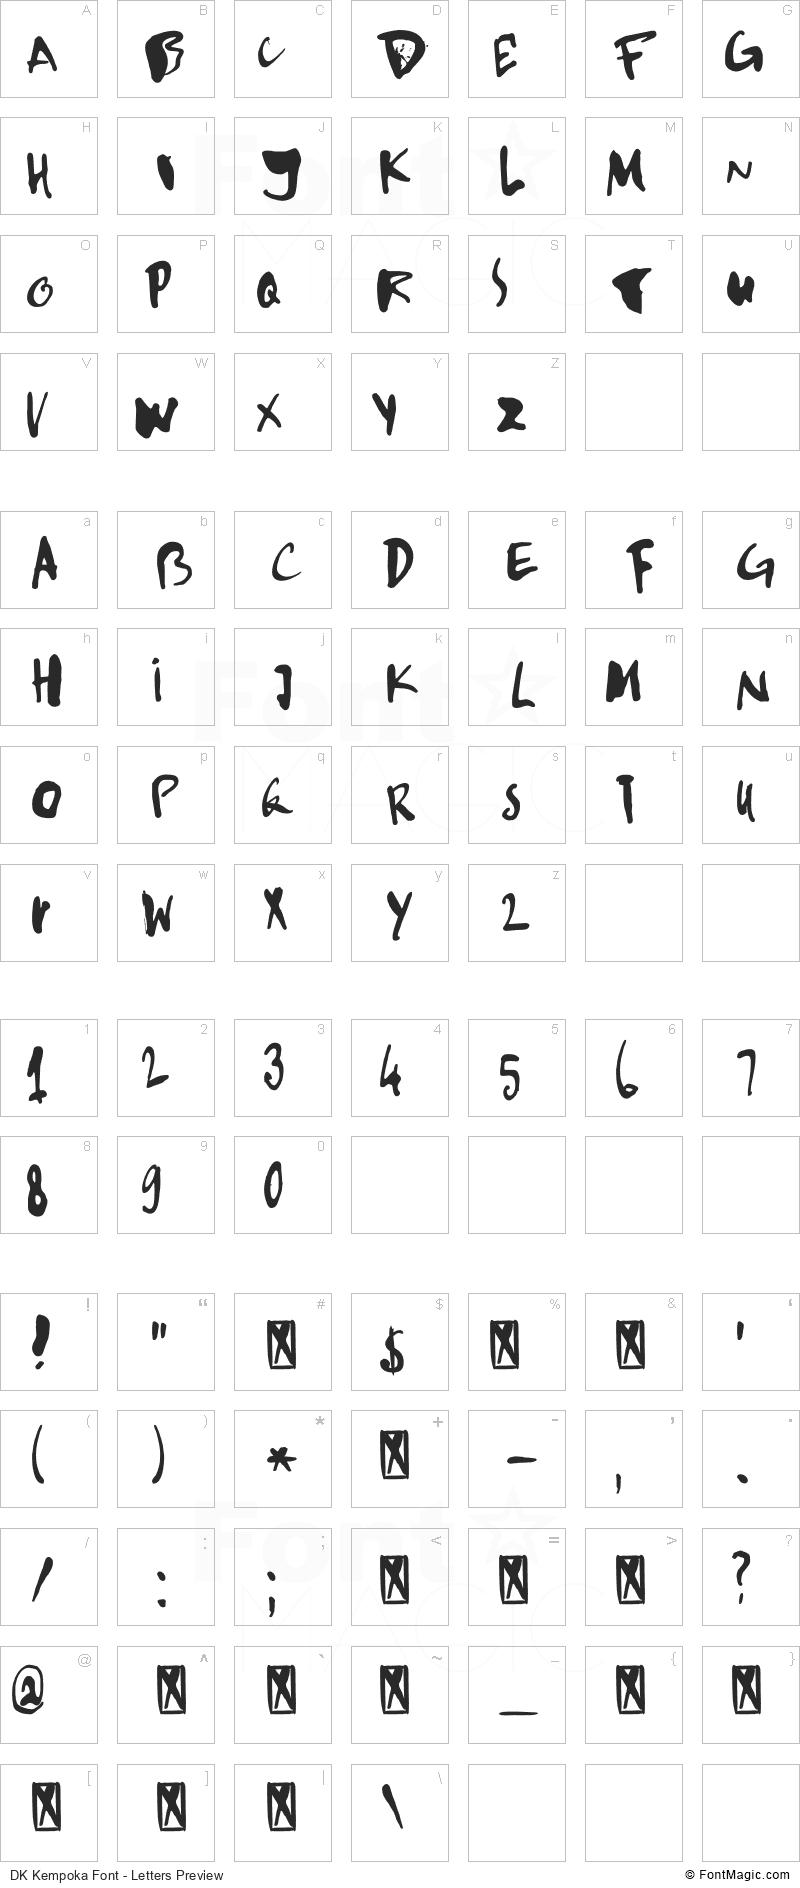 DK Kempoka Font - All Latters Preview Chart